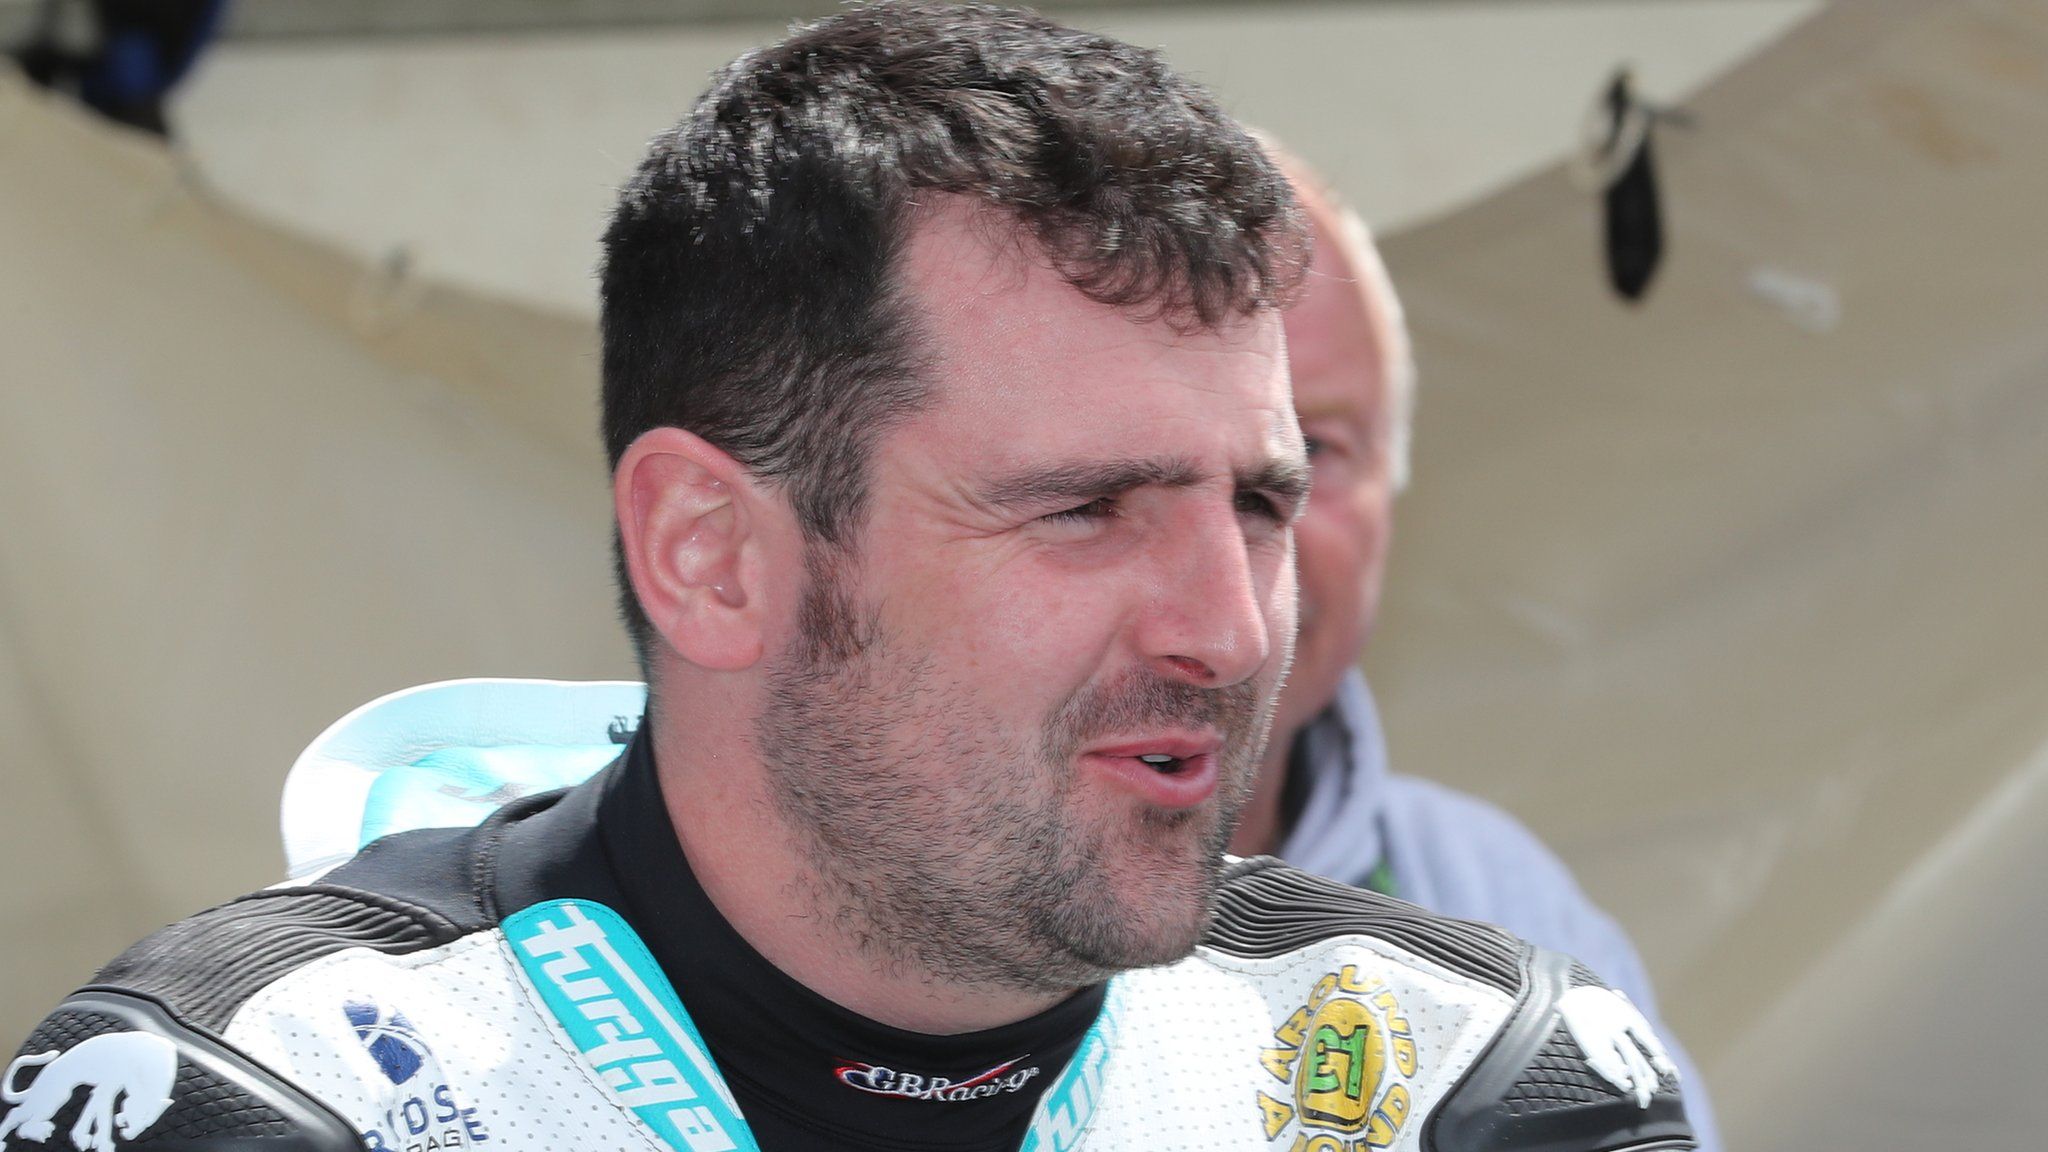 Michael Dunlop at the 2019 Isle of Man TT